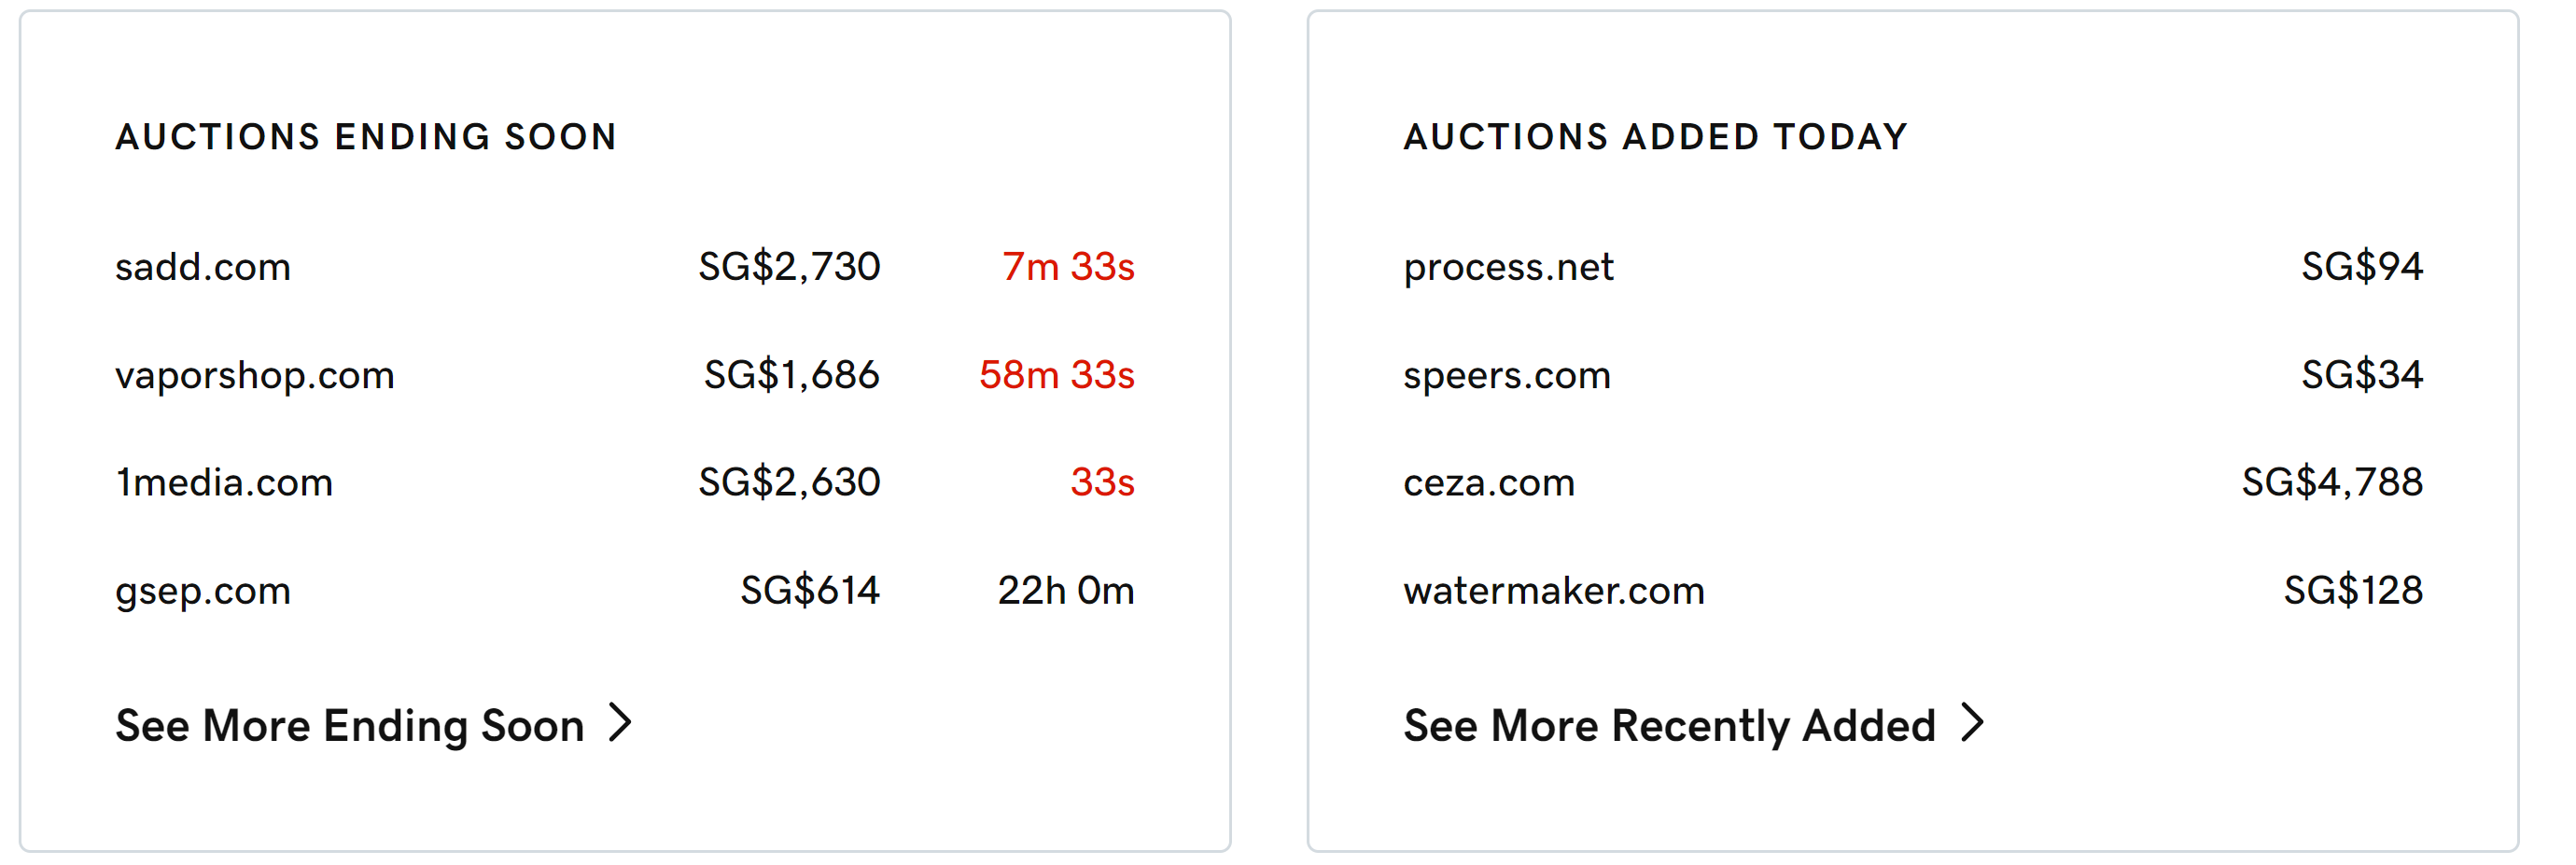 auctions-singapore.png